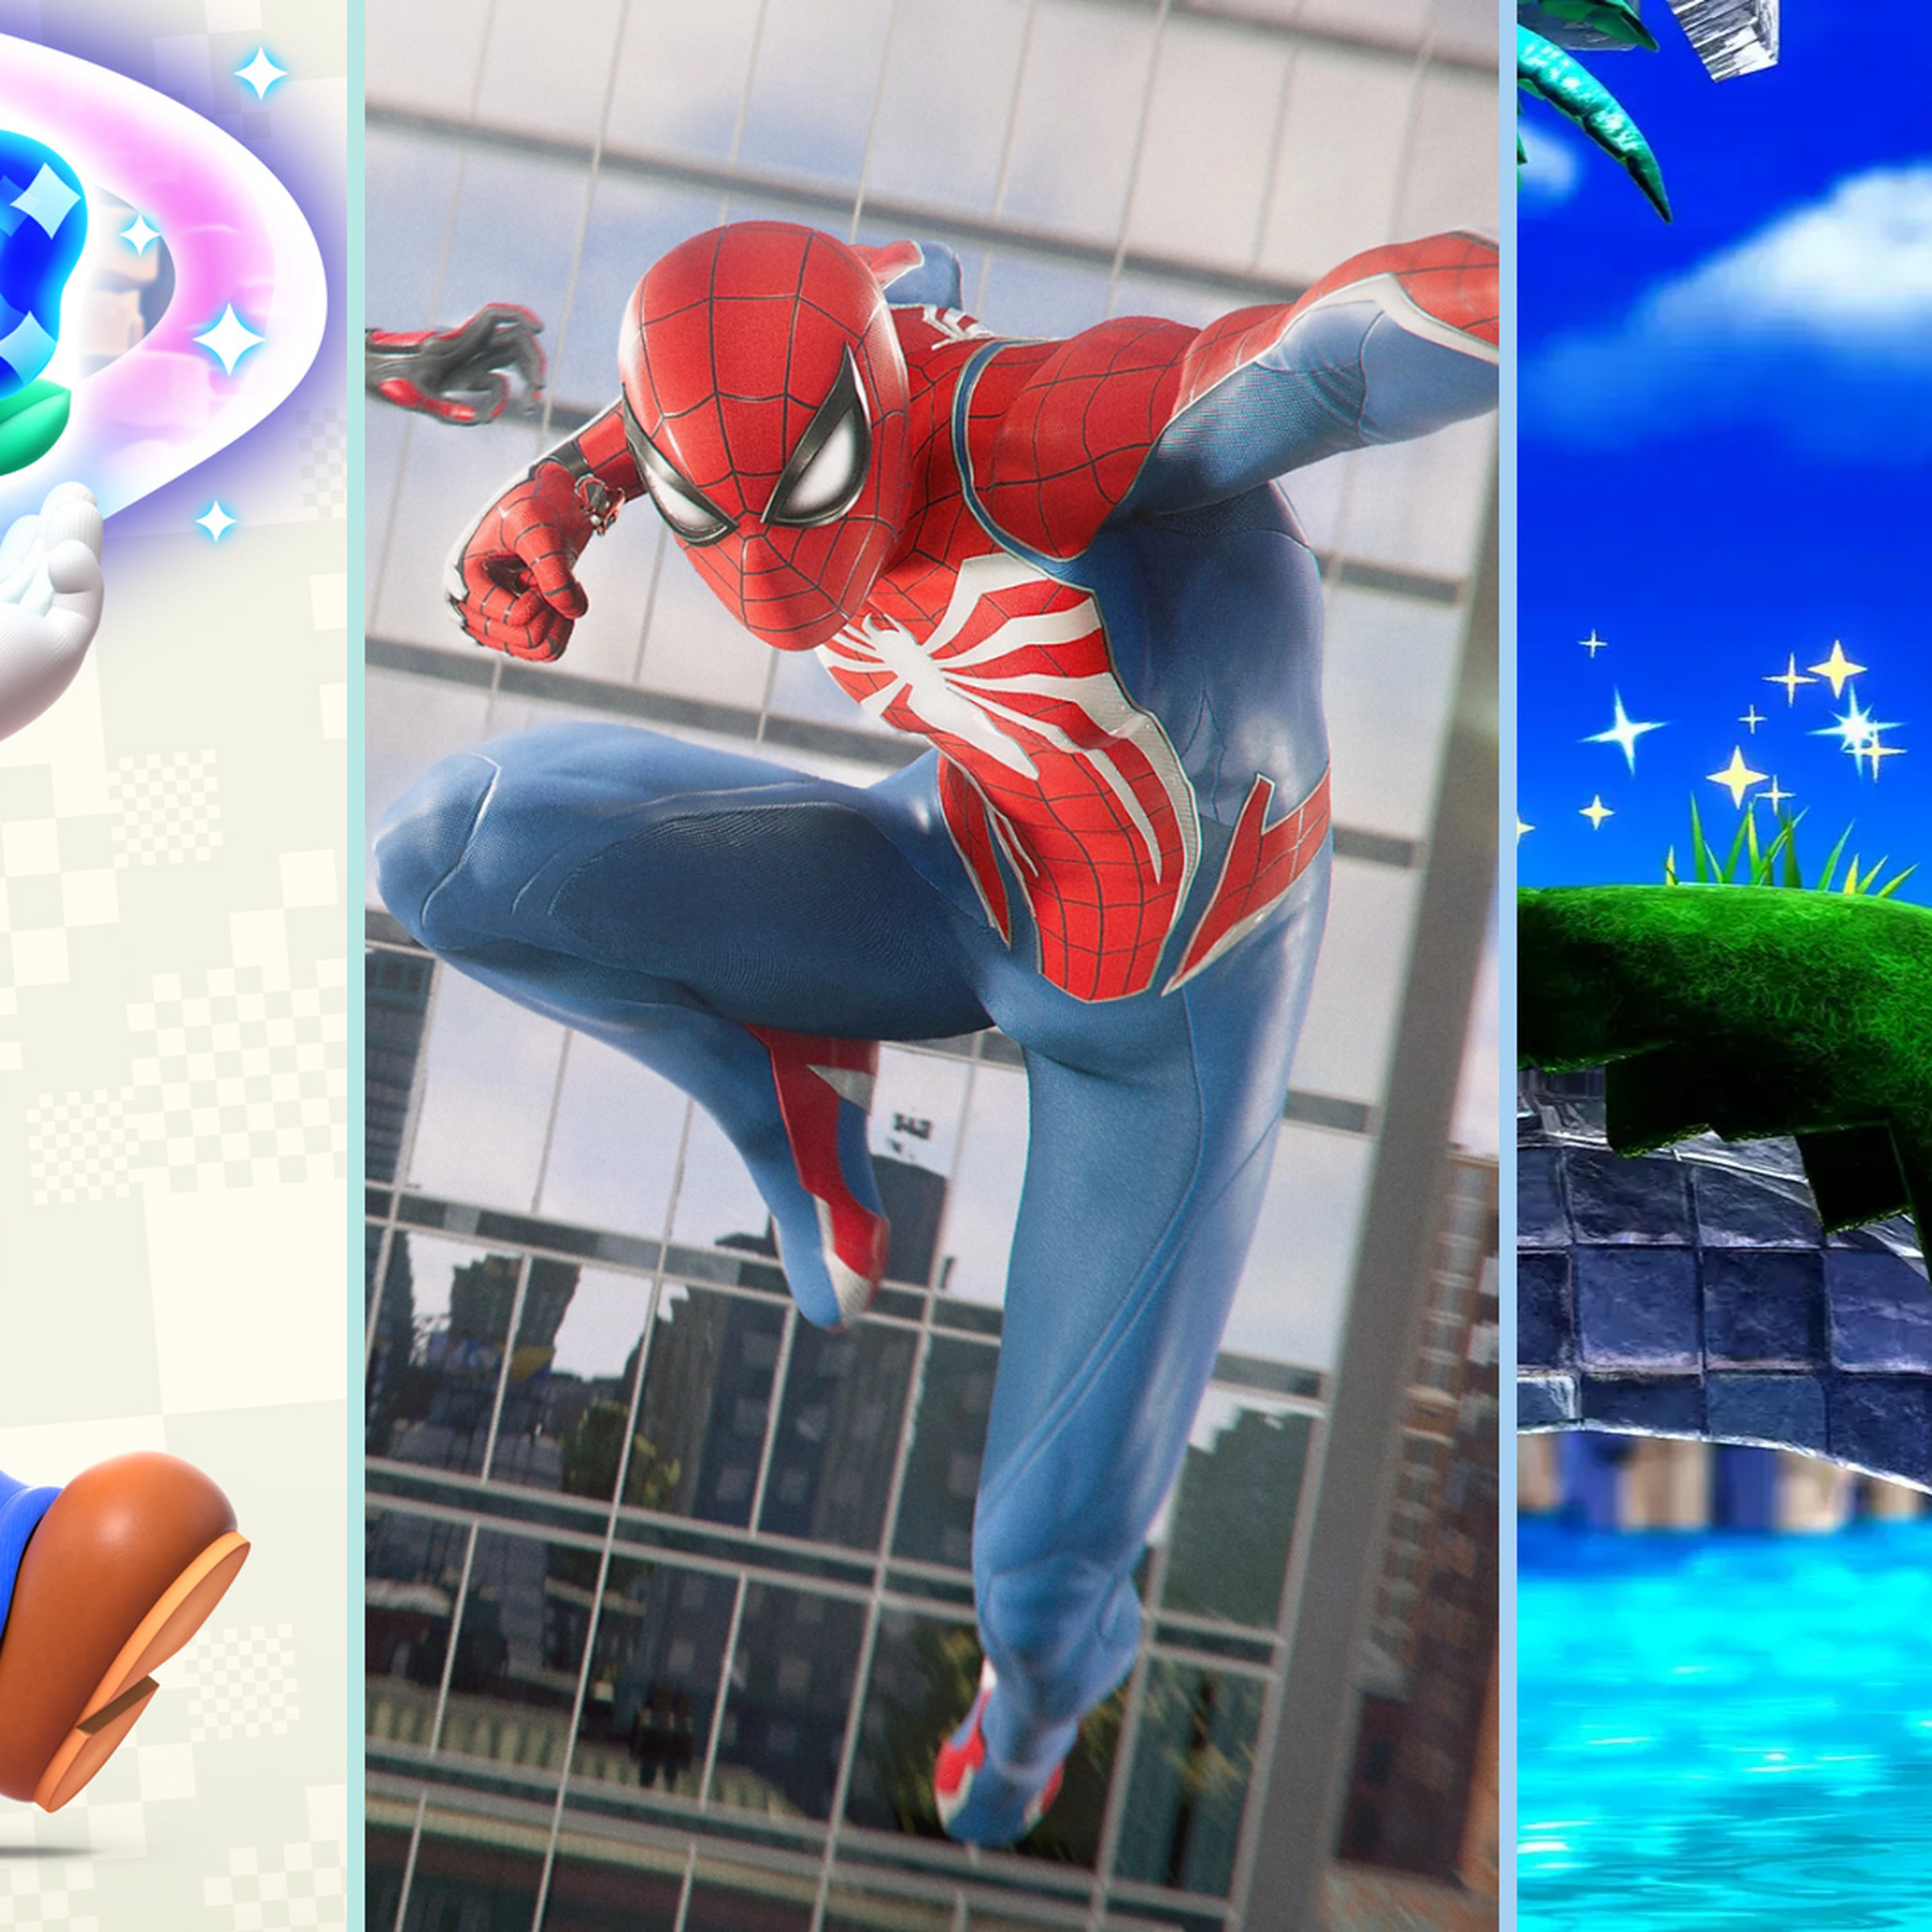 Composite image of screenshots taken from Super Mario Bros. Wonder, Marvel’s Spider-Man 2, and Sonic Superstars